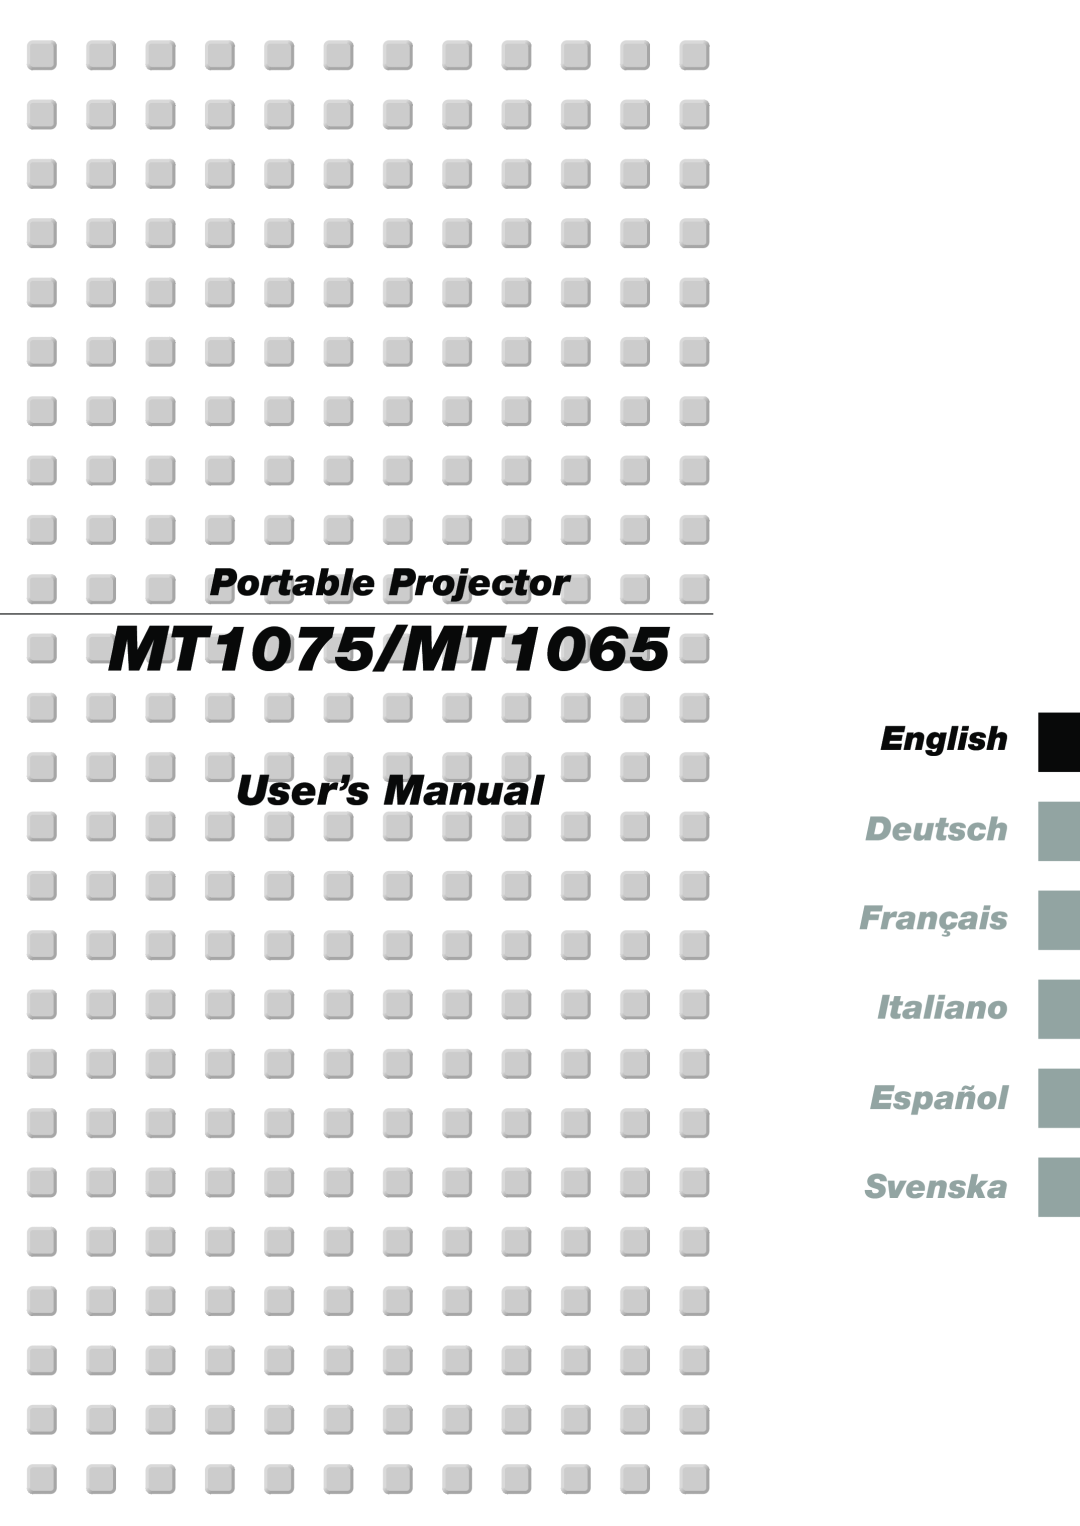 Kensington user manual MT1075/MT1065, User’s Manual, Portable Projector, English 